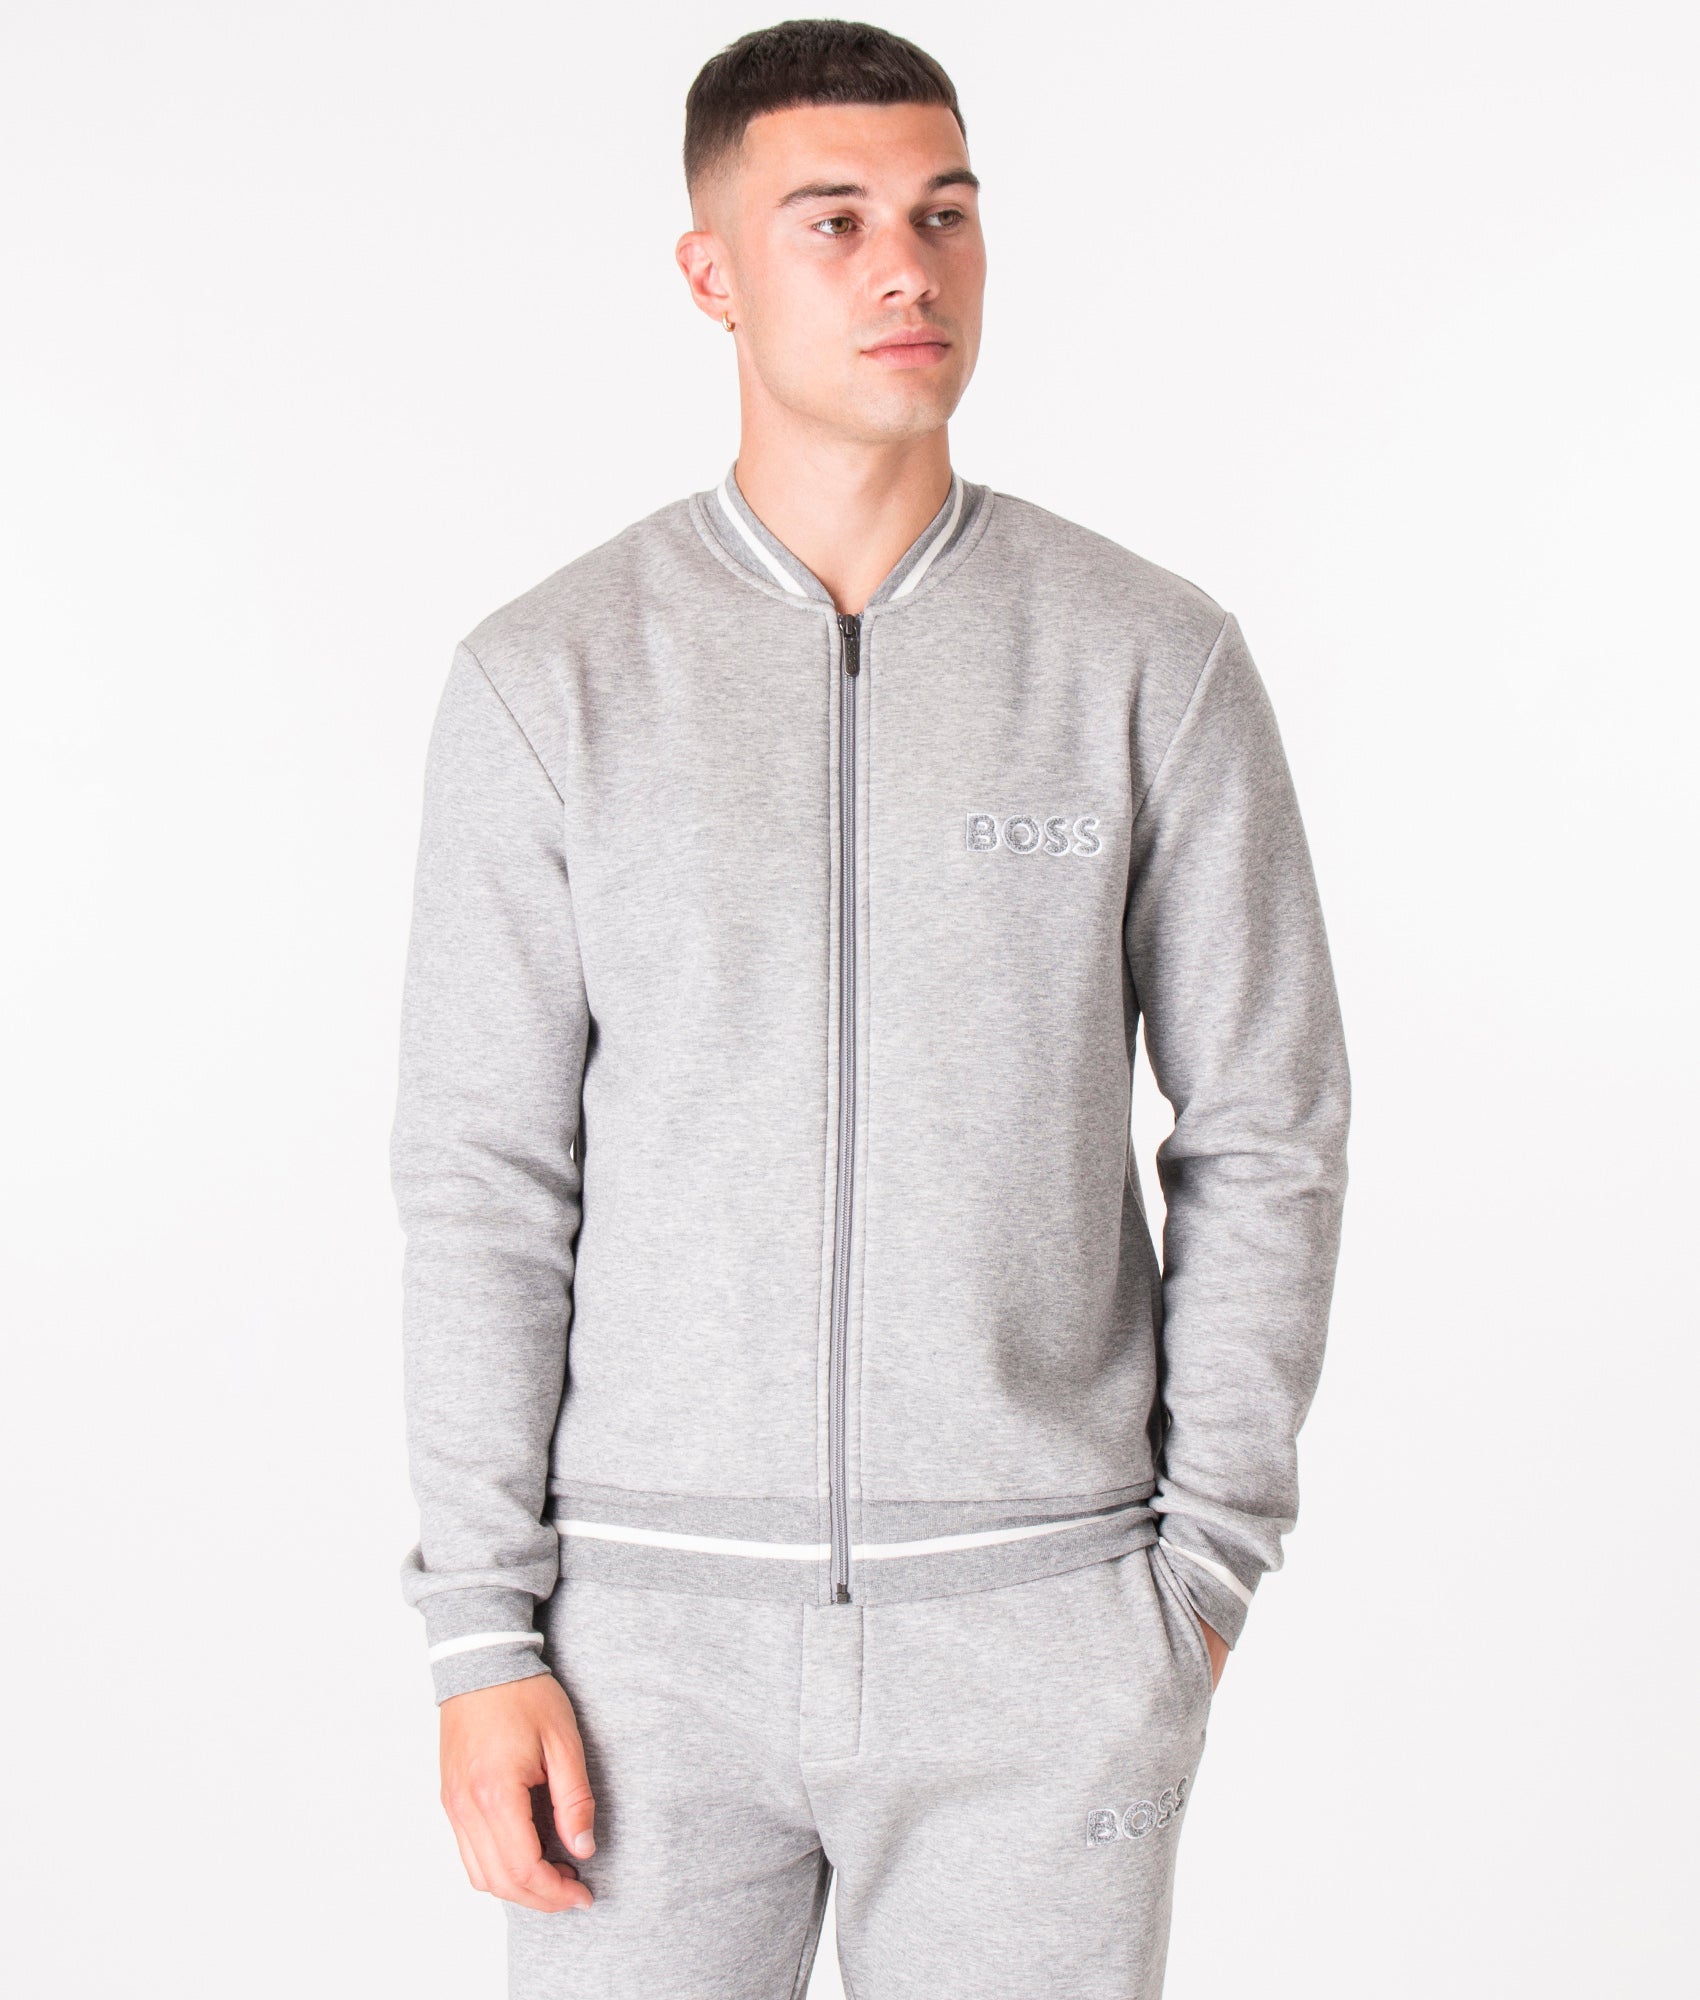 BOSS Mens Zip Through Contemp College J Sweatshirt - Colour: 033 Medium Grey - Size: Medium